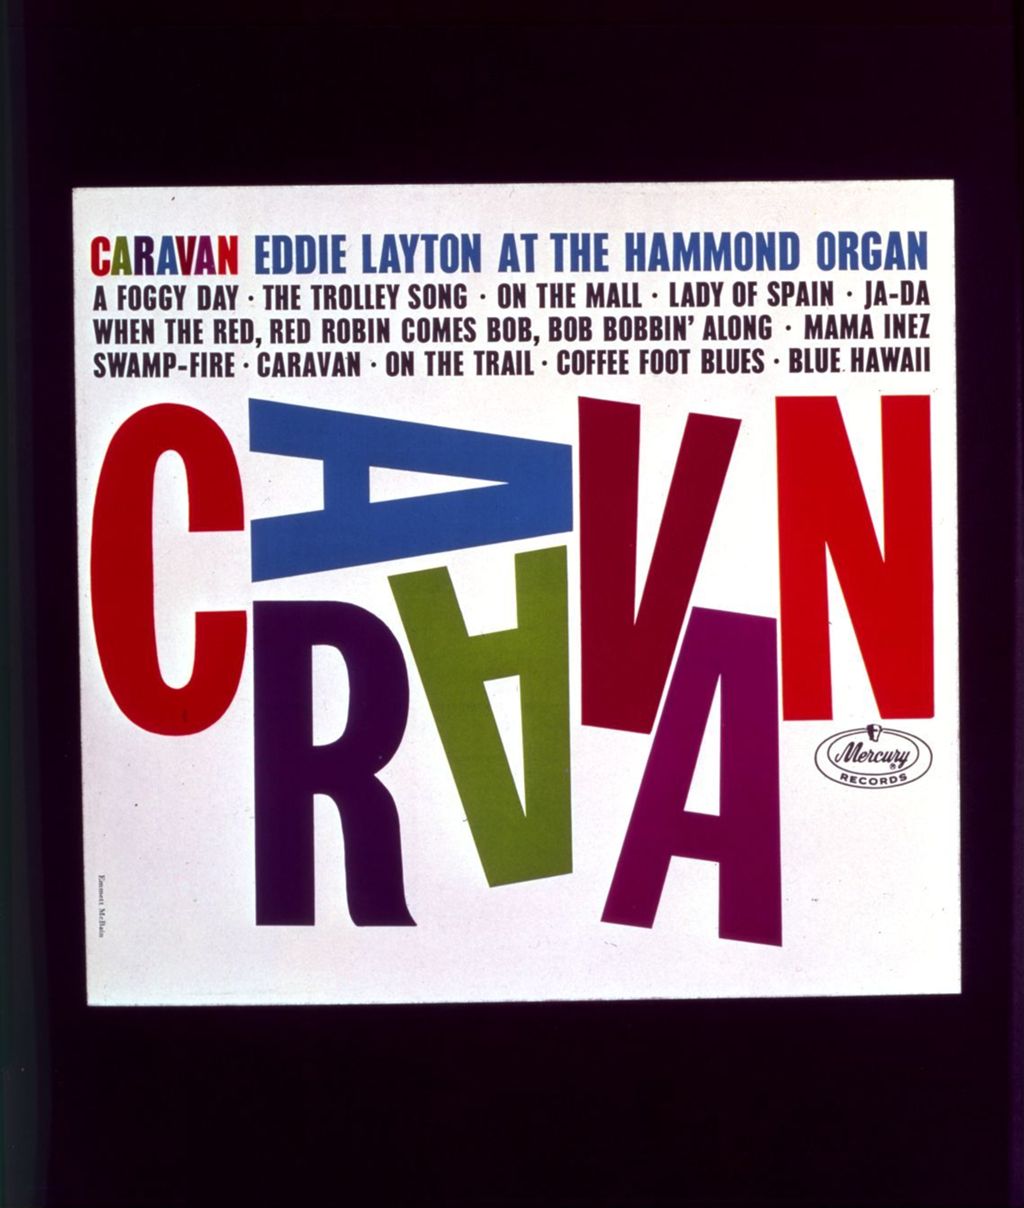 Miniature of Caravan: Eddie Layton at the Hammond Organ, album cover